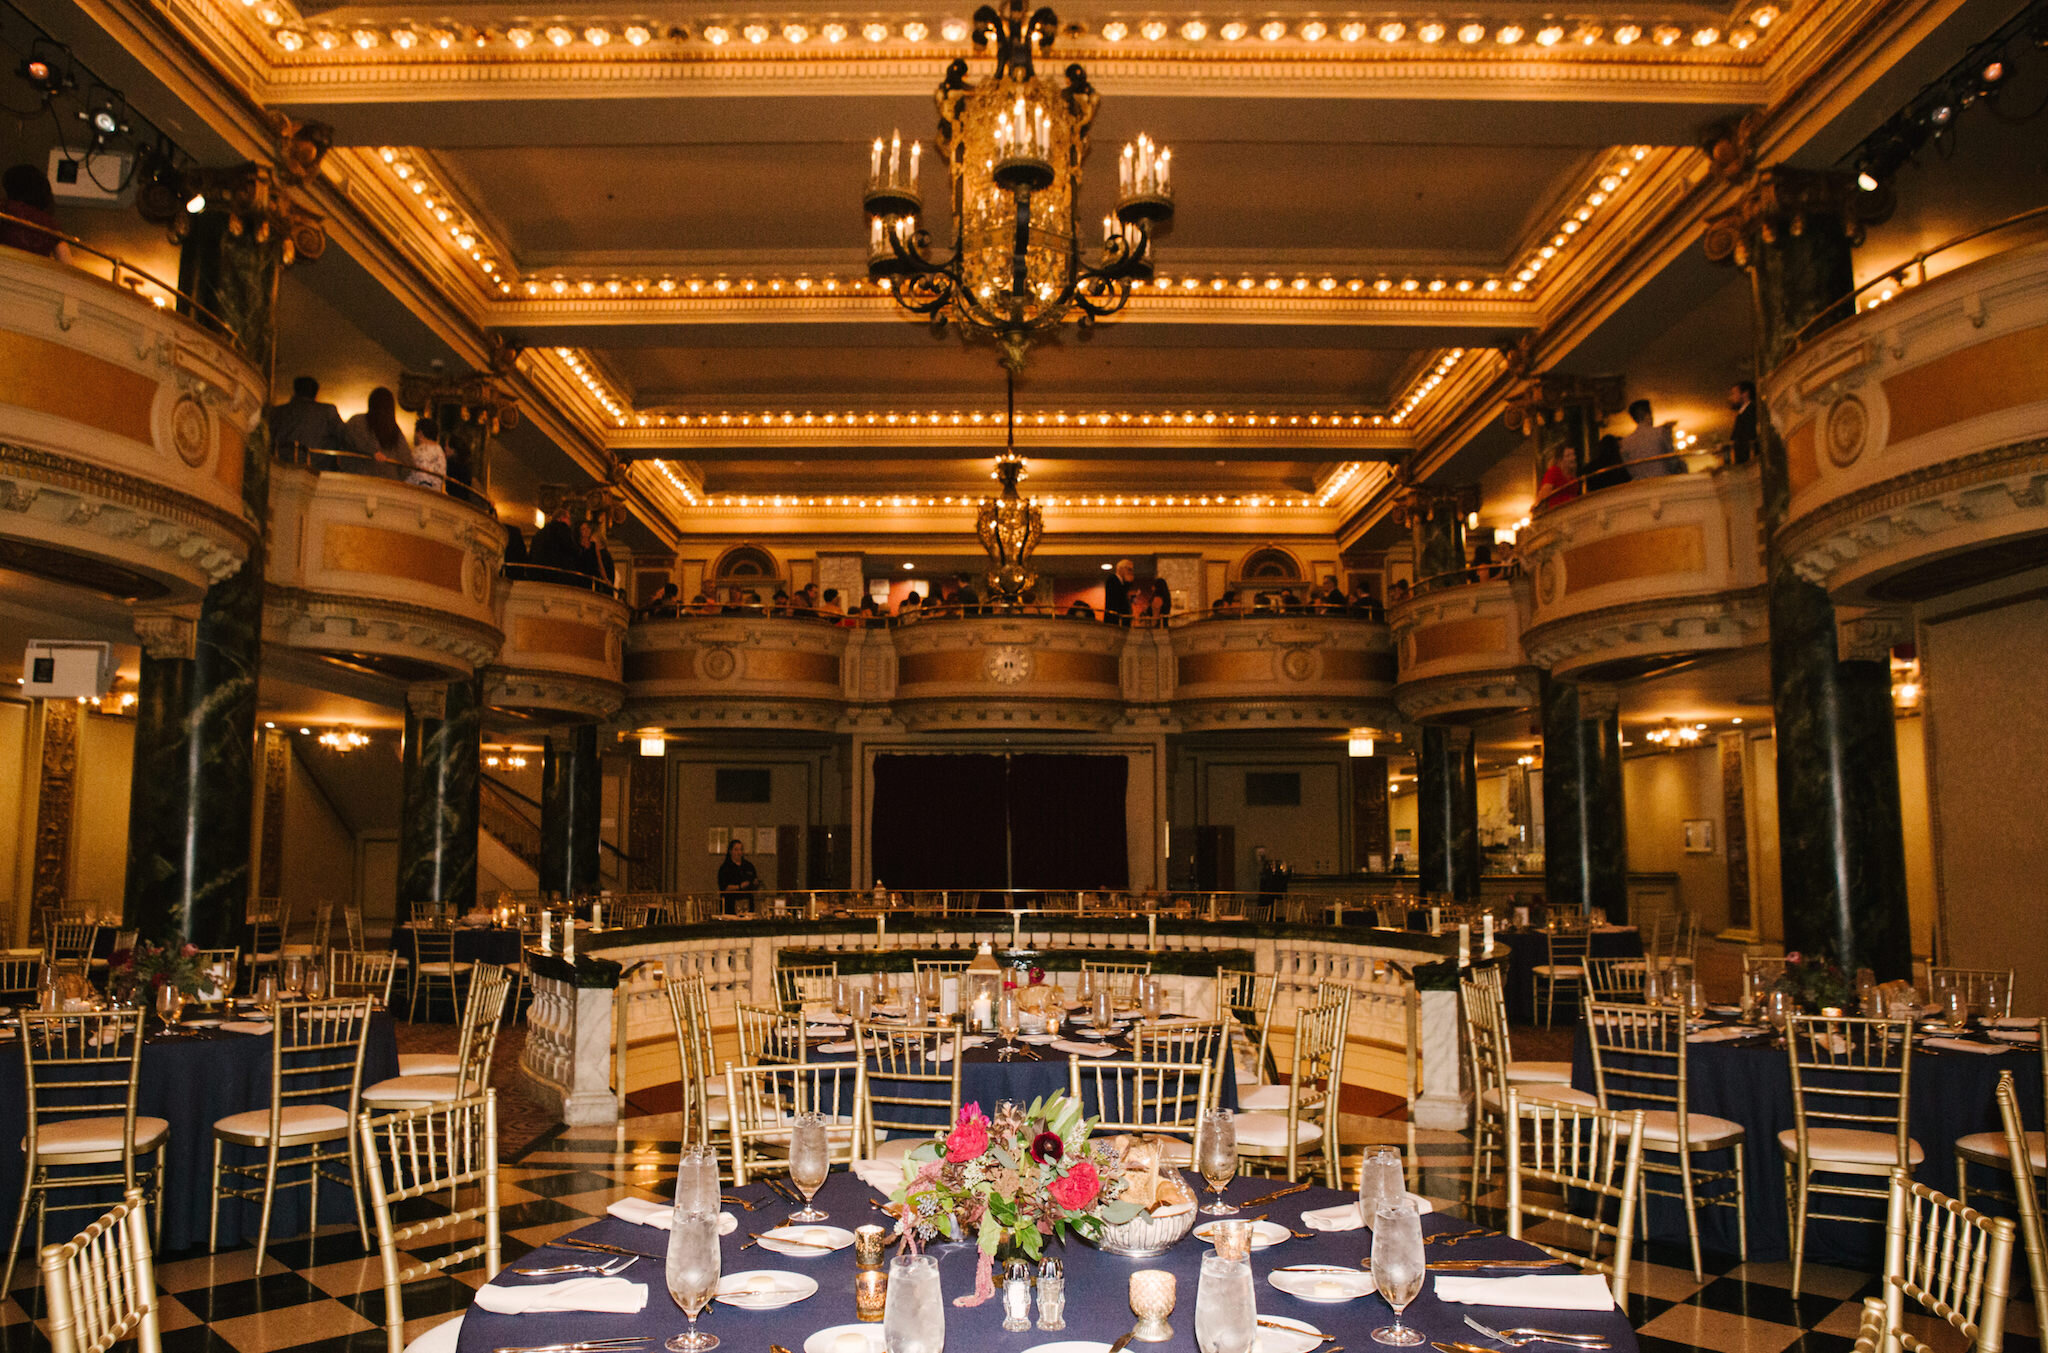 Ballroom Wedding Reception: Elegant Jewel-Toned Wedding captured by Dorey Kronick featured on CHI thee WED